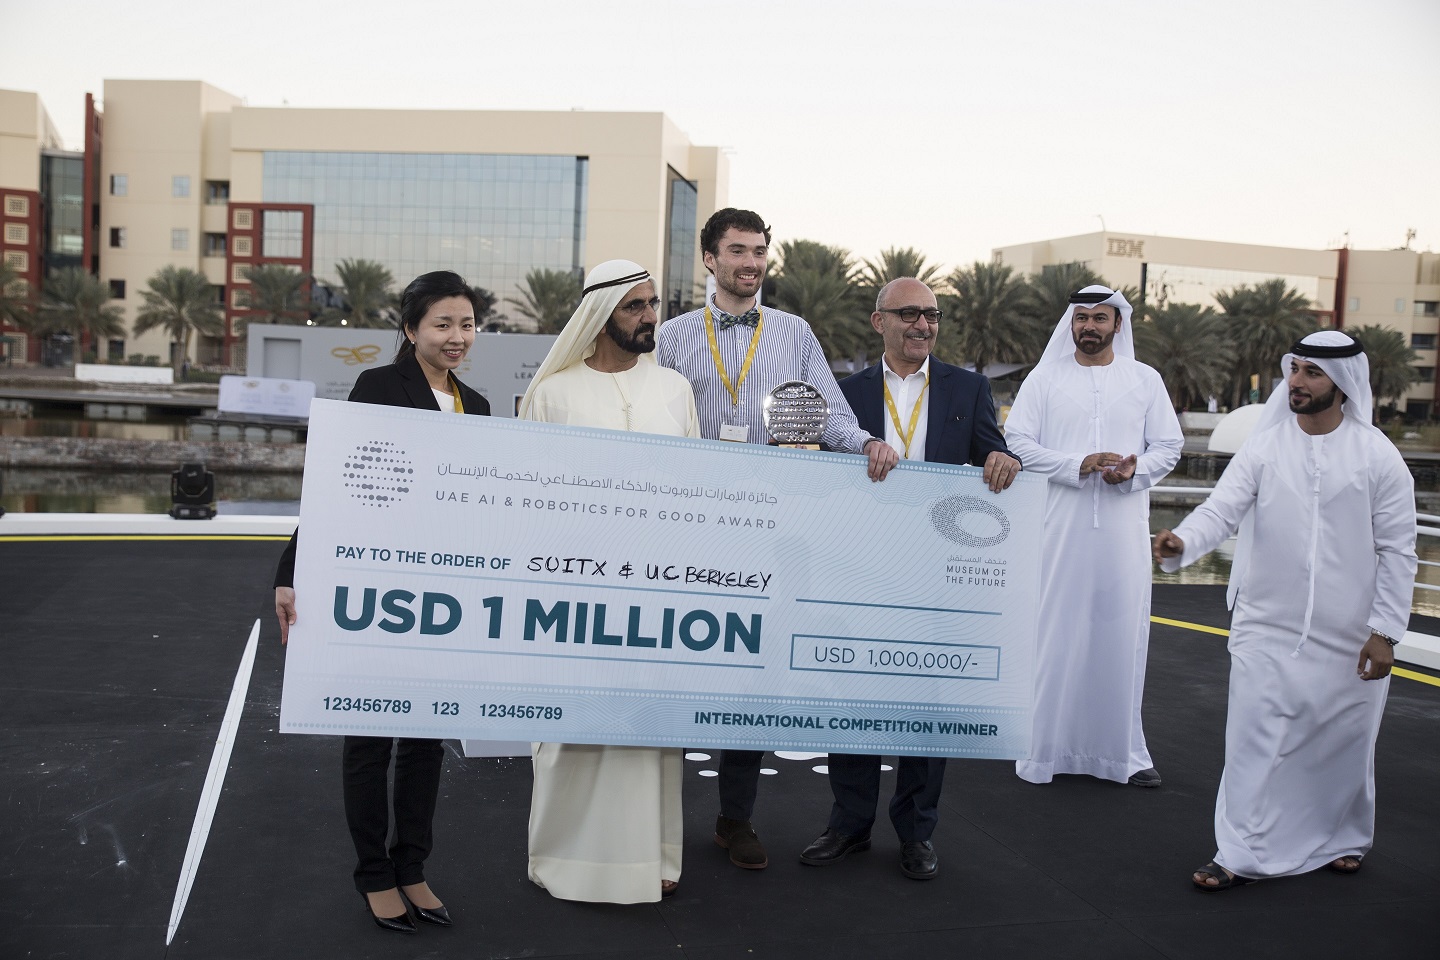 Winners of UAE Drones for Good Award and UAE AI & Robotics Award for Good